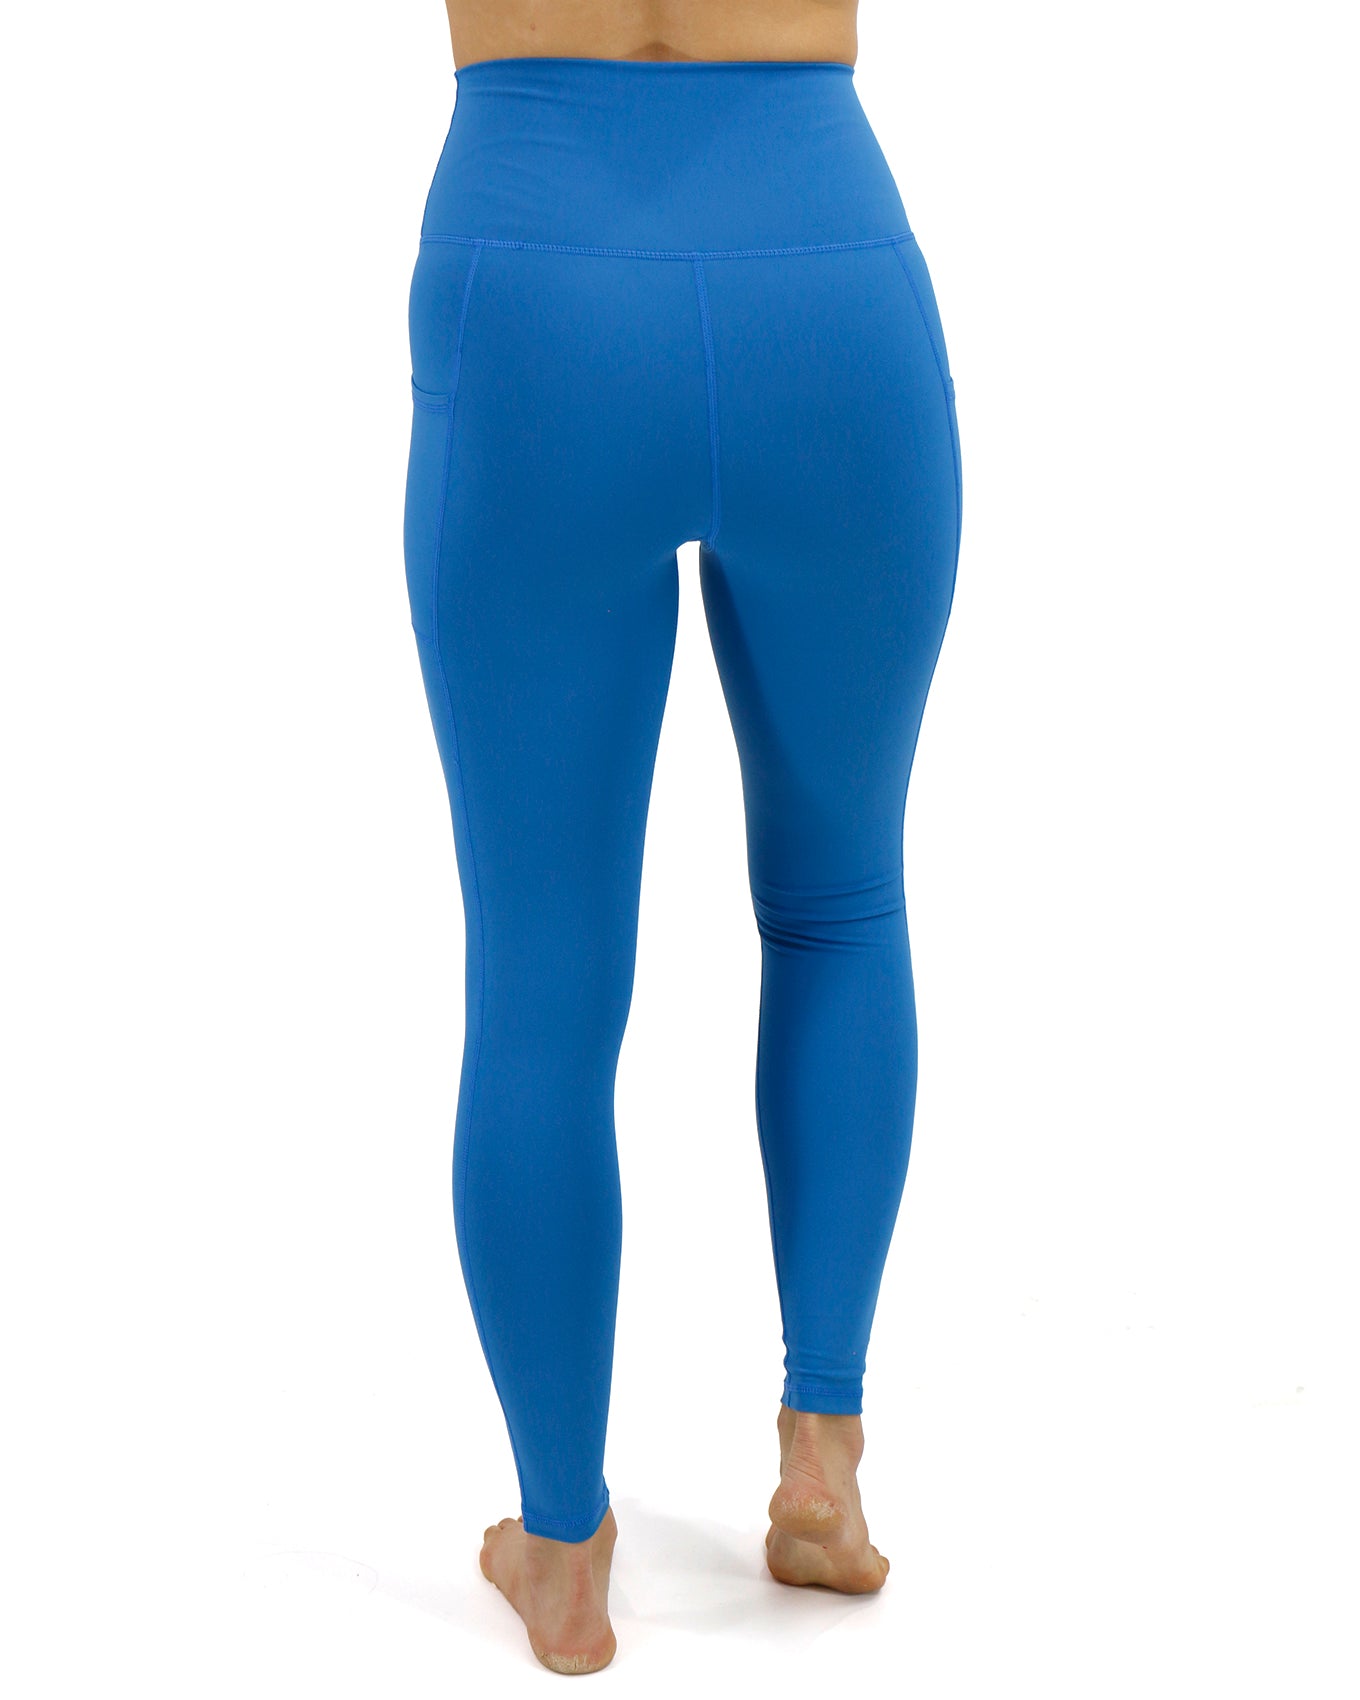 Fitness workout leggings - Corner blue - Squat proof - High waist